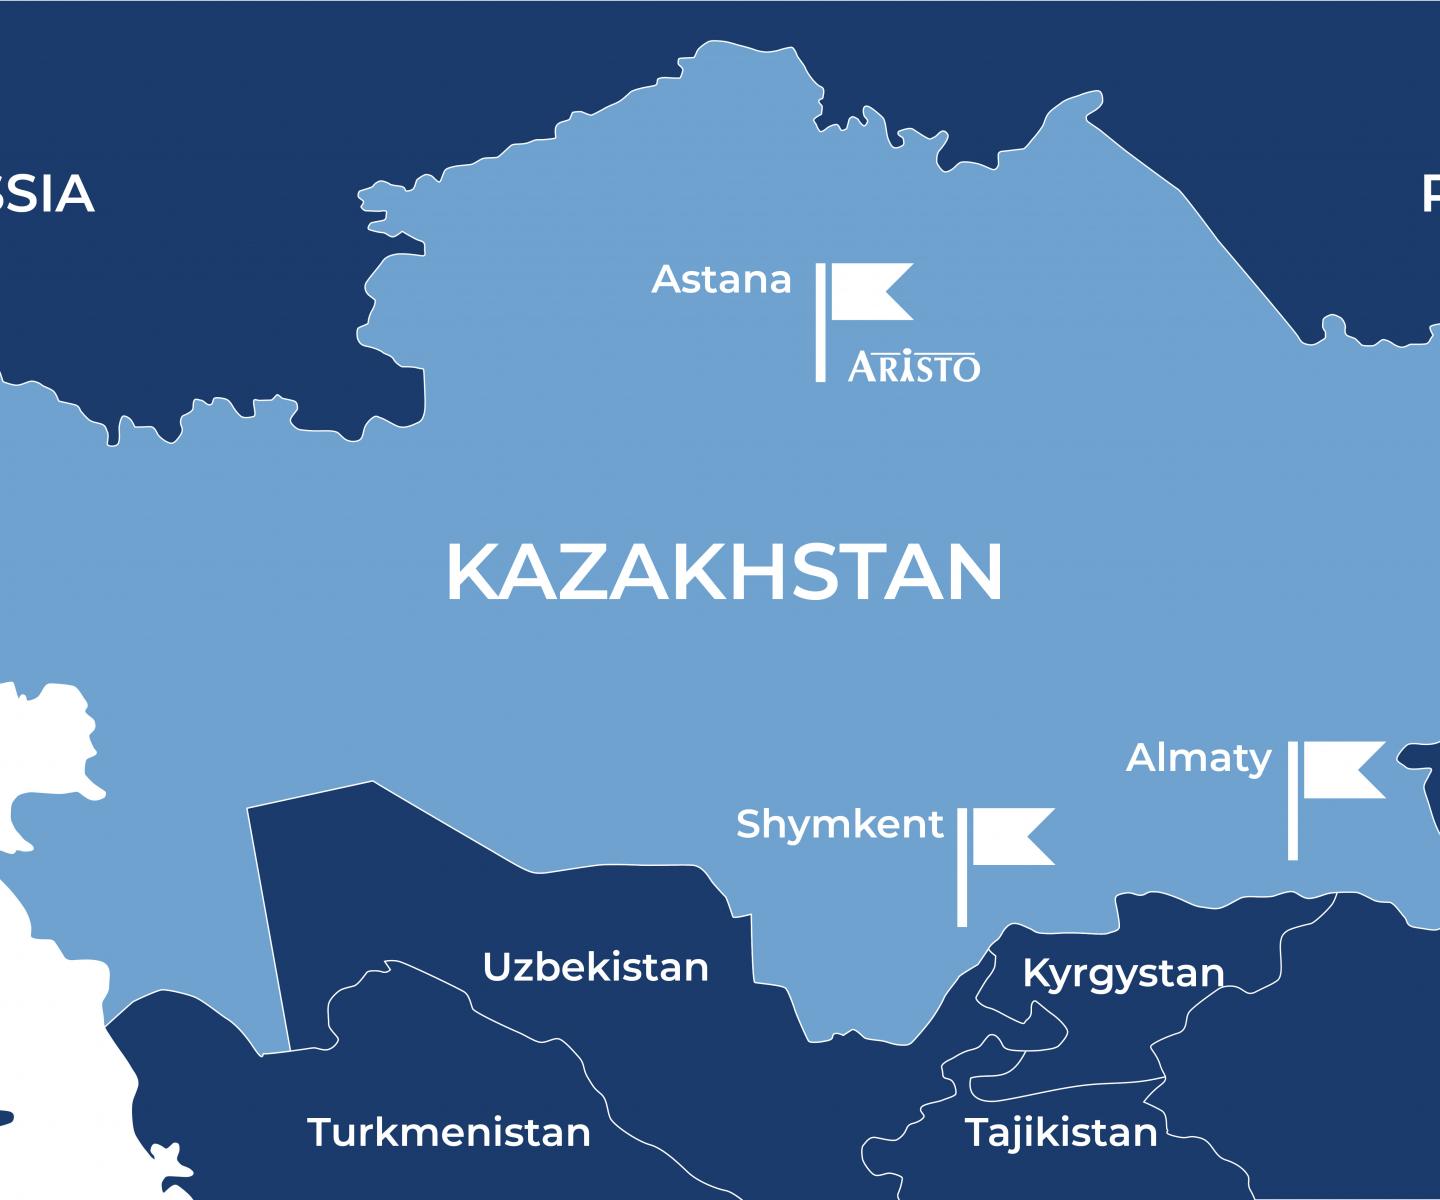 Aristo-Kazakh_map